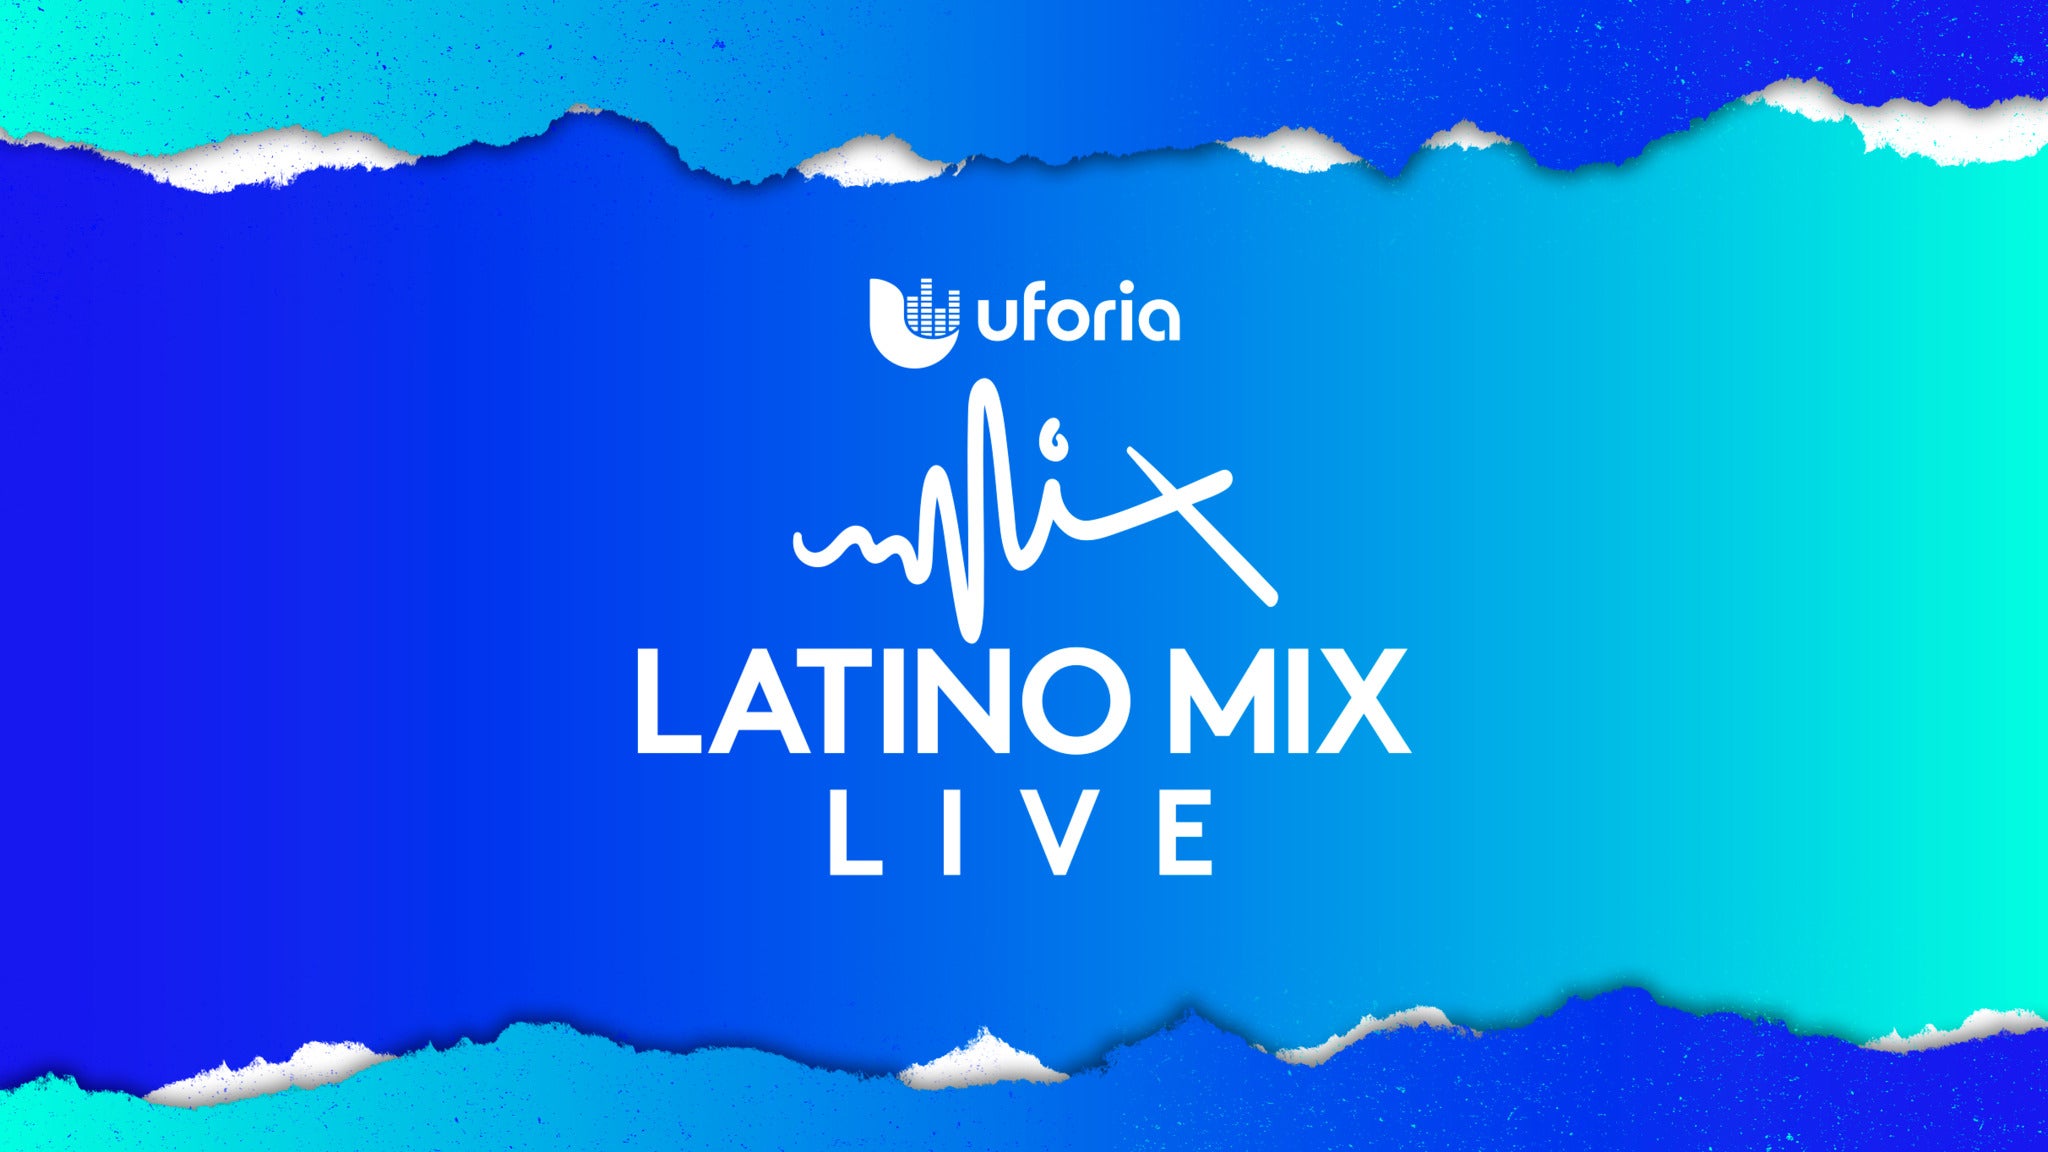 Uforia Latino Mix Live pre-sale password